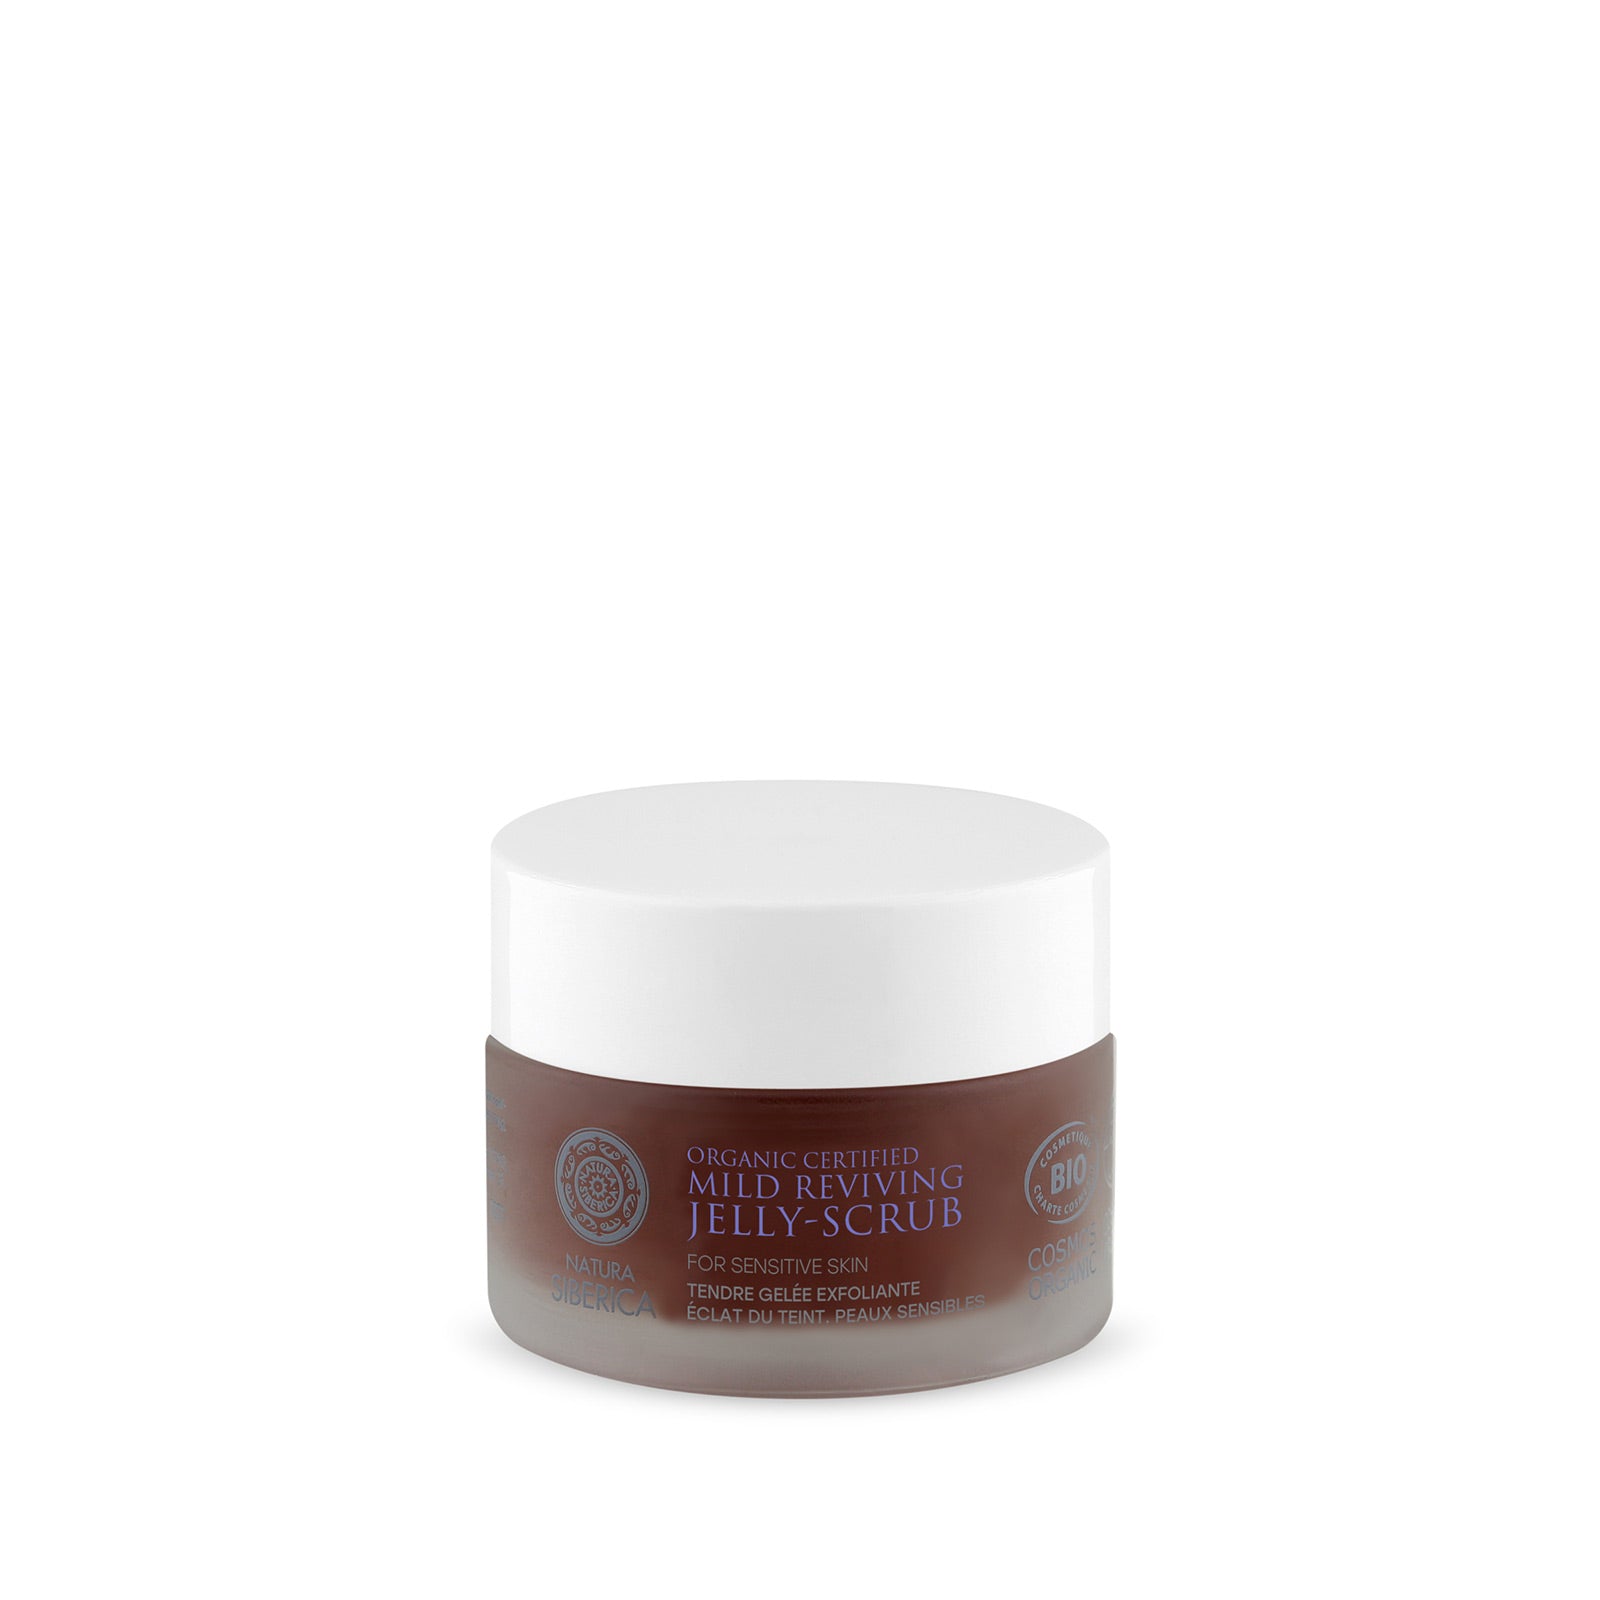 Image of Natura Siberica Organic Certified Mild Reviving Jelly-Scrub for sensitive skin, 50 ml